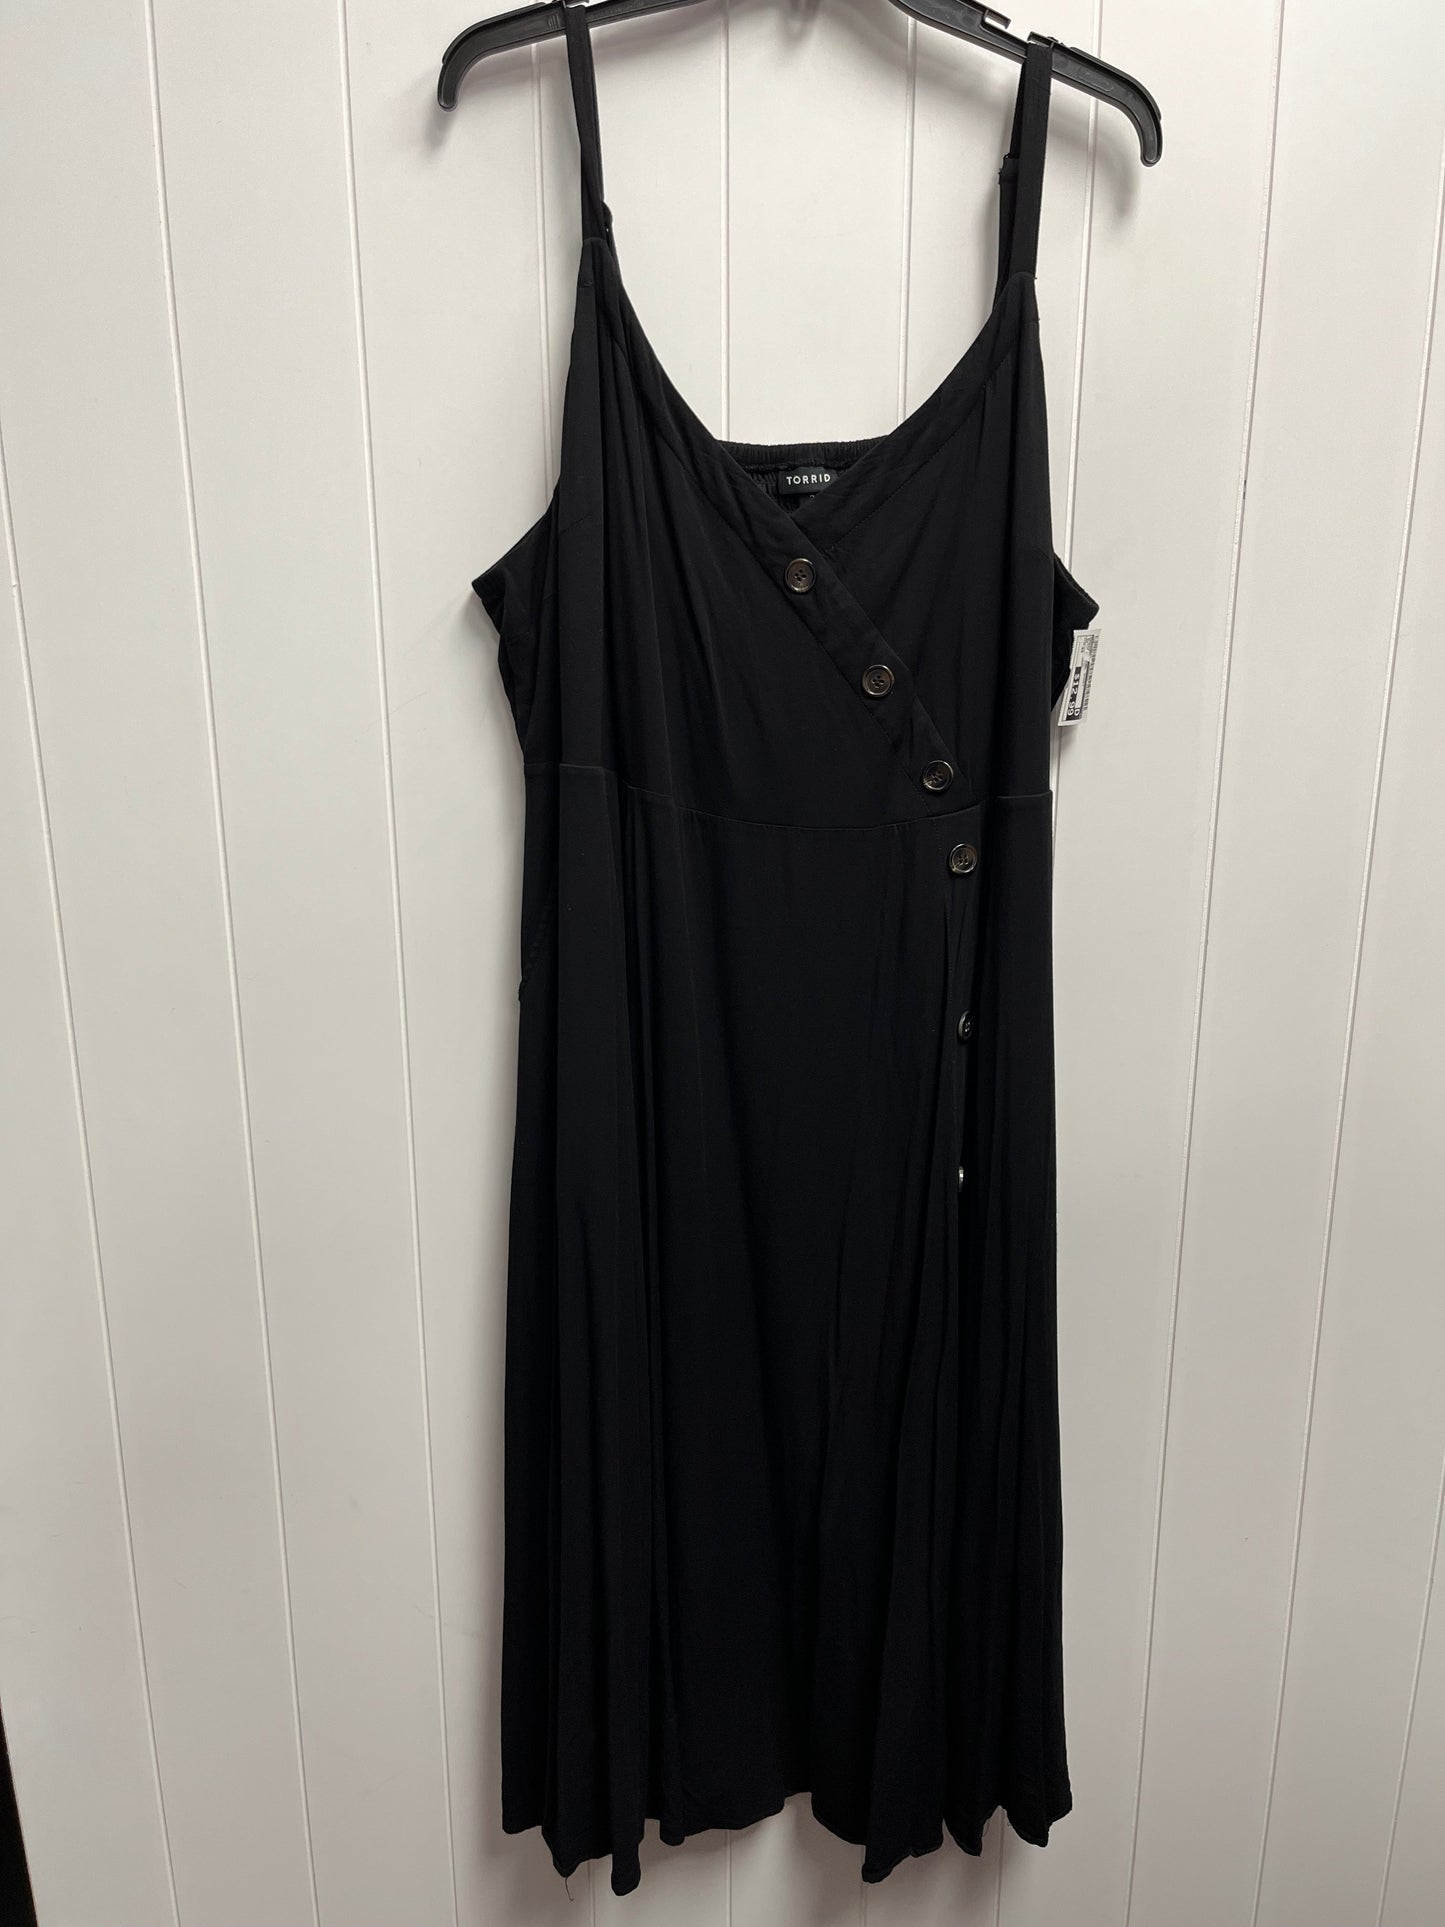 Black Dress Casual Short Torrid, Size 3x